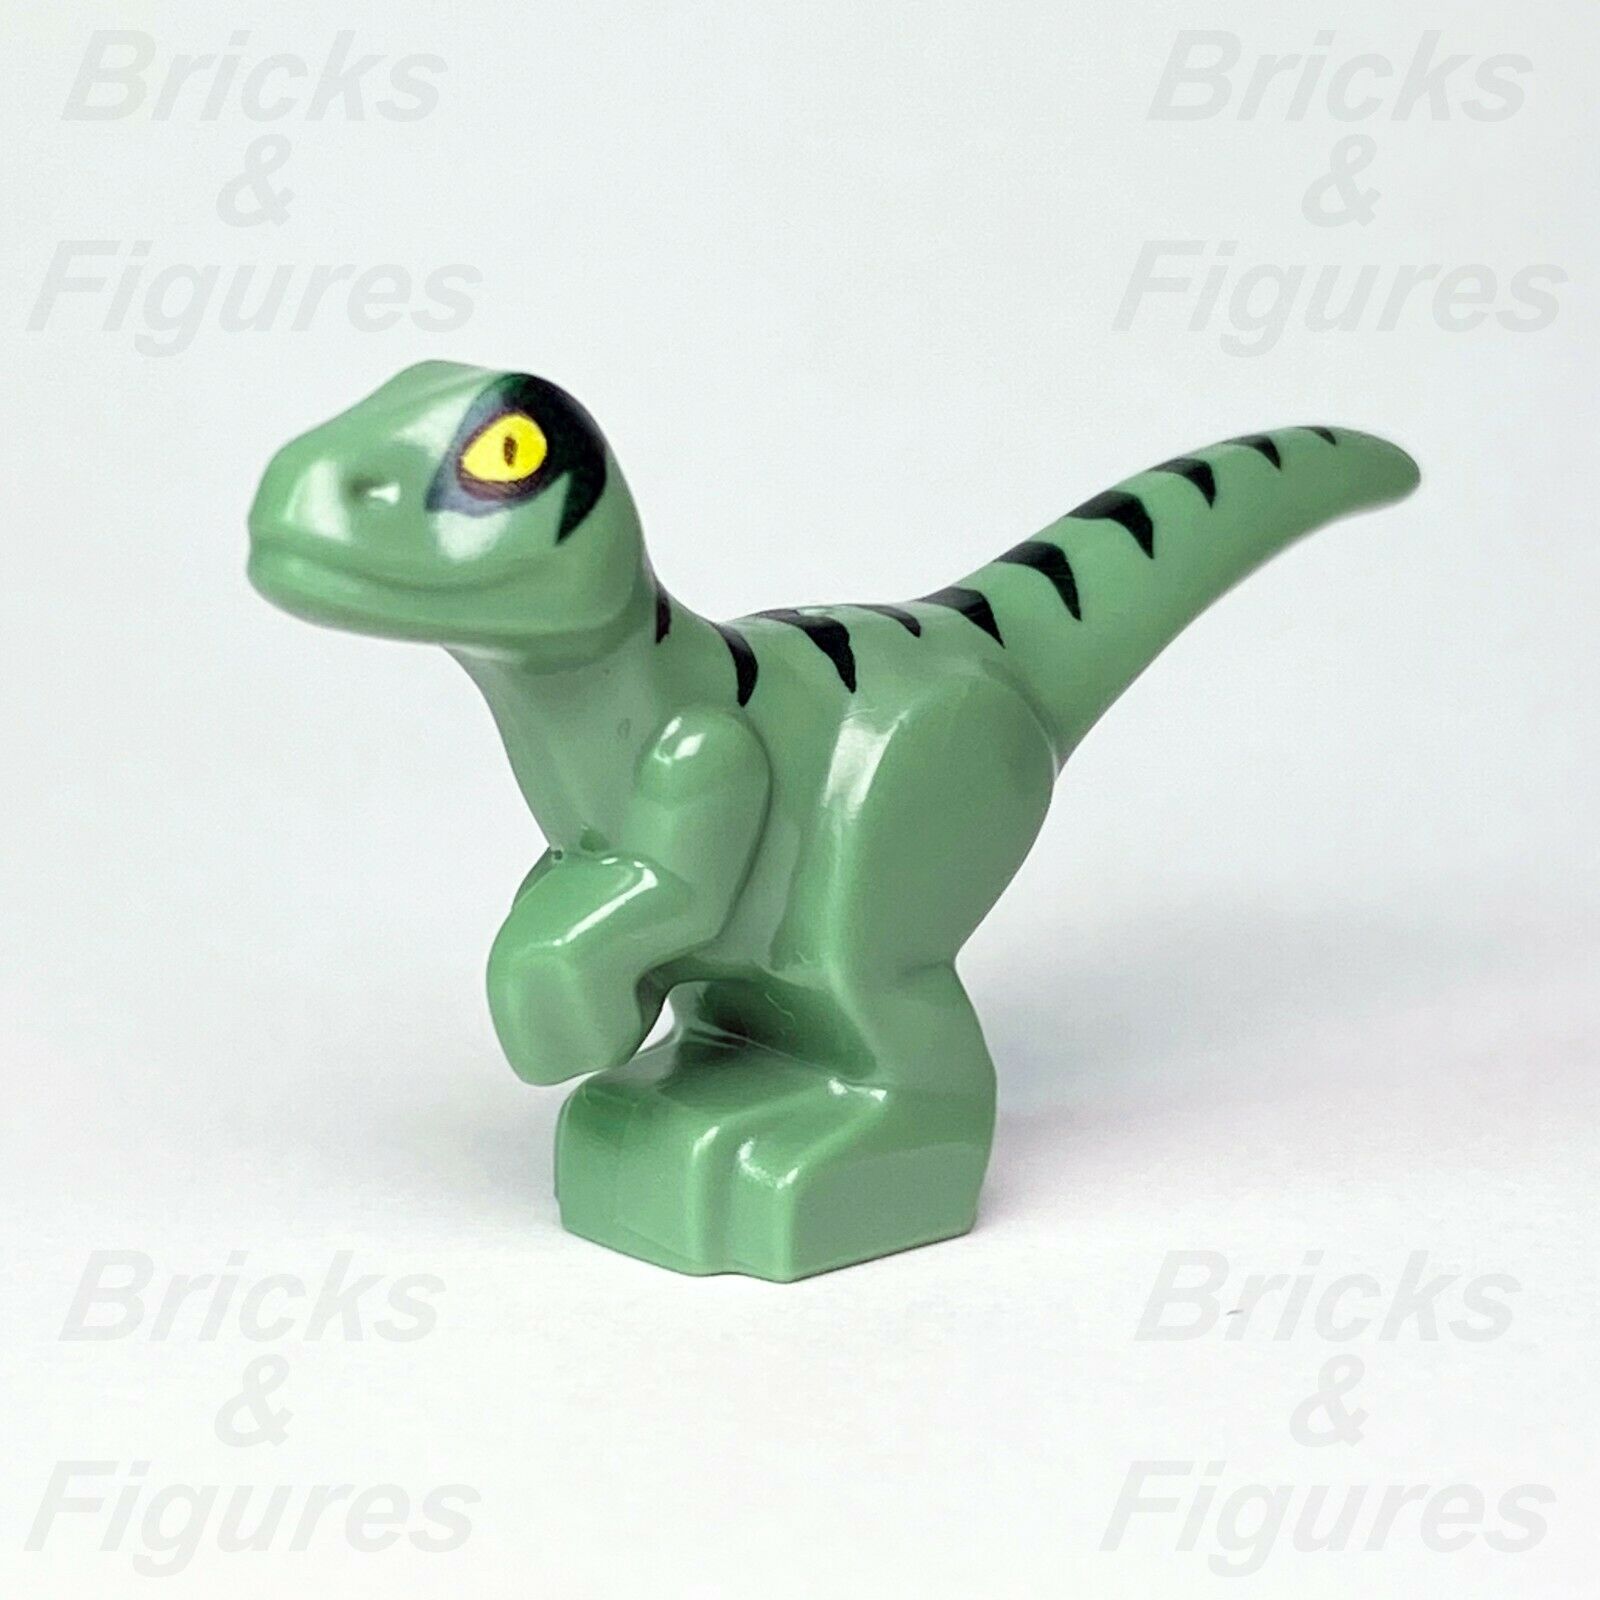 New Jurassic World LEGO Baby Raptor with Dark Green Stripes Dinosaur 75938 - Bricks & Figures